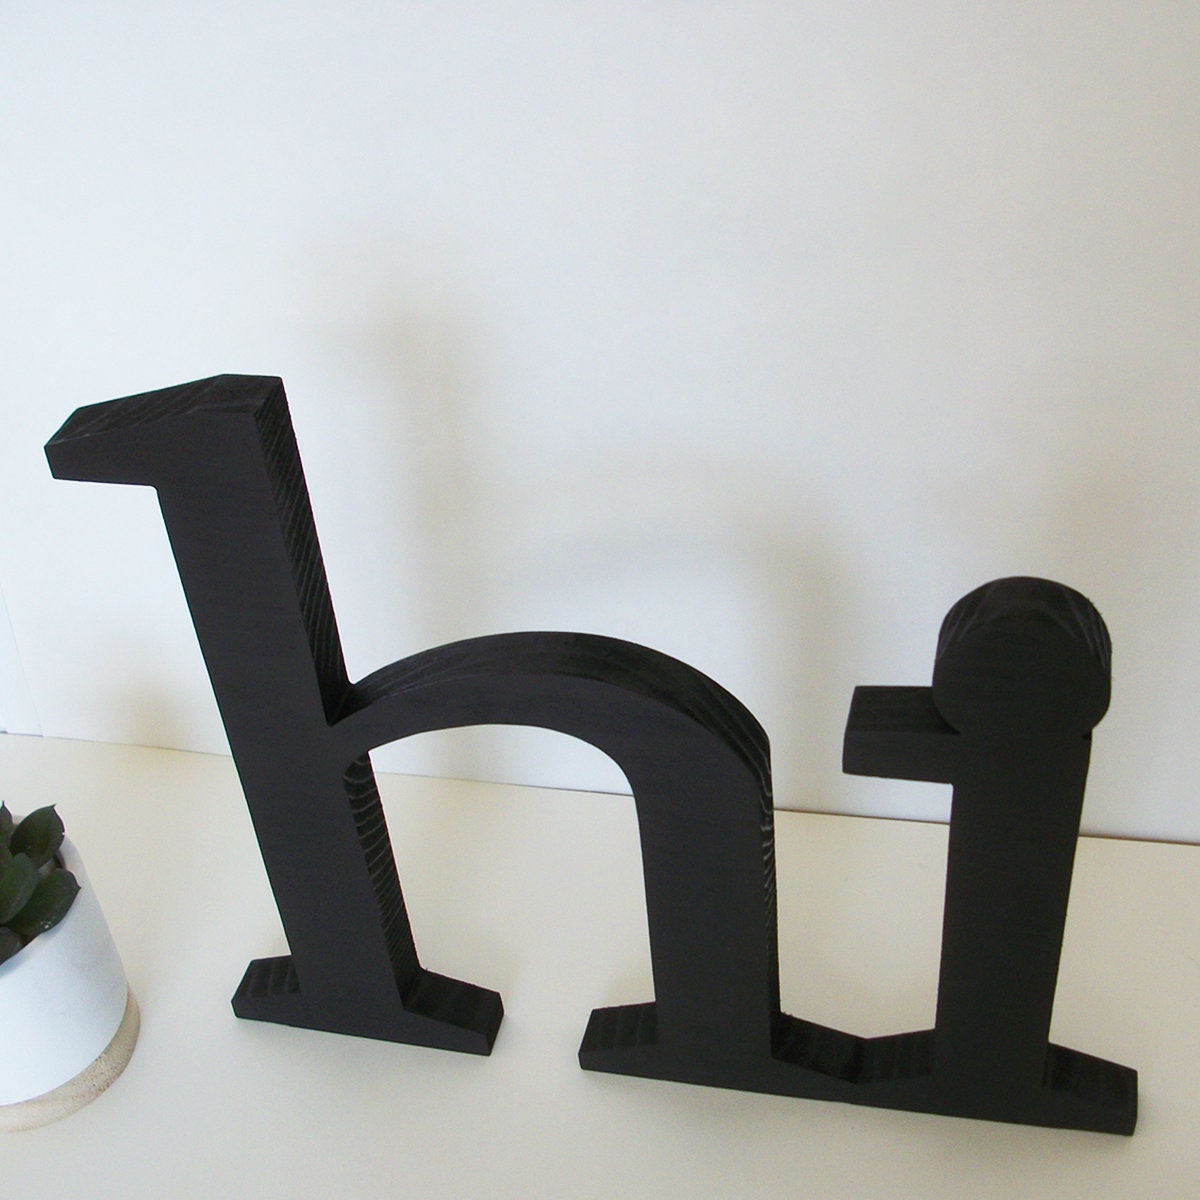 Hi Wood Sign 10 Inch Tall Hi Word Sign. Painted Hi Letter | Etsy